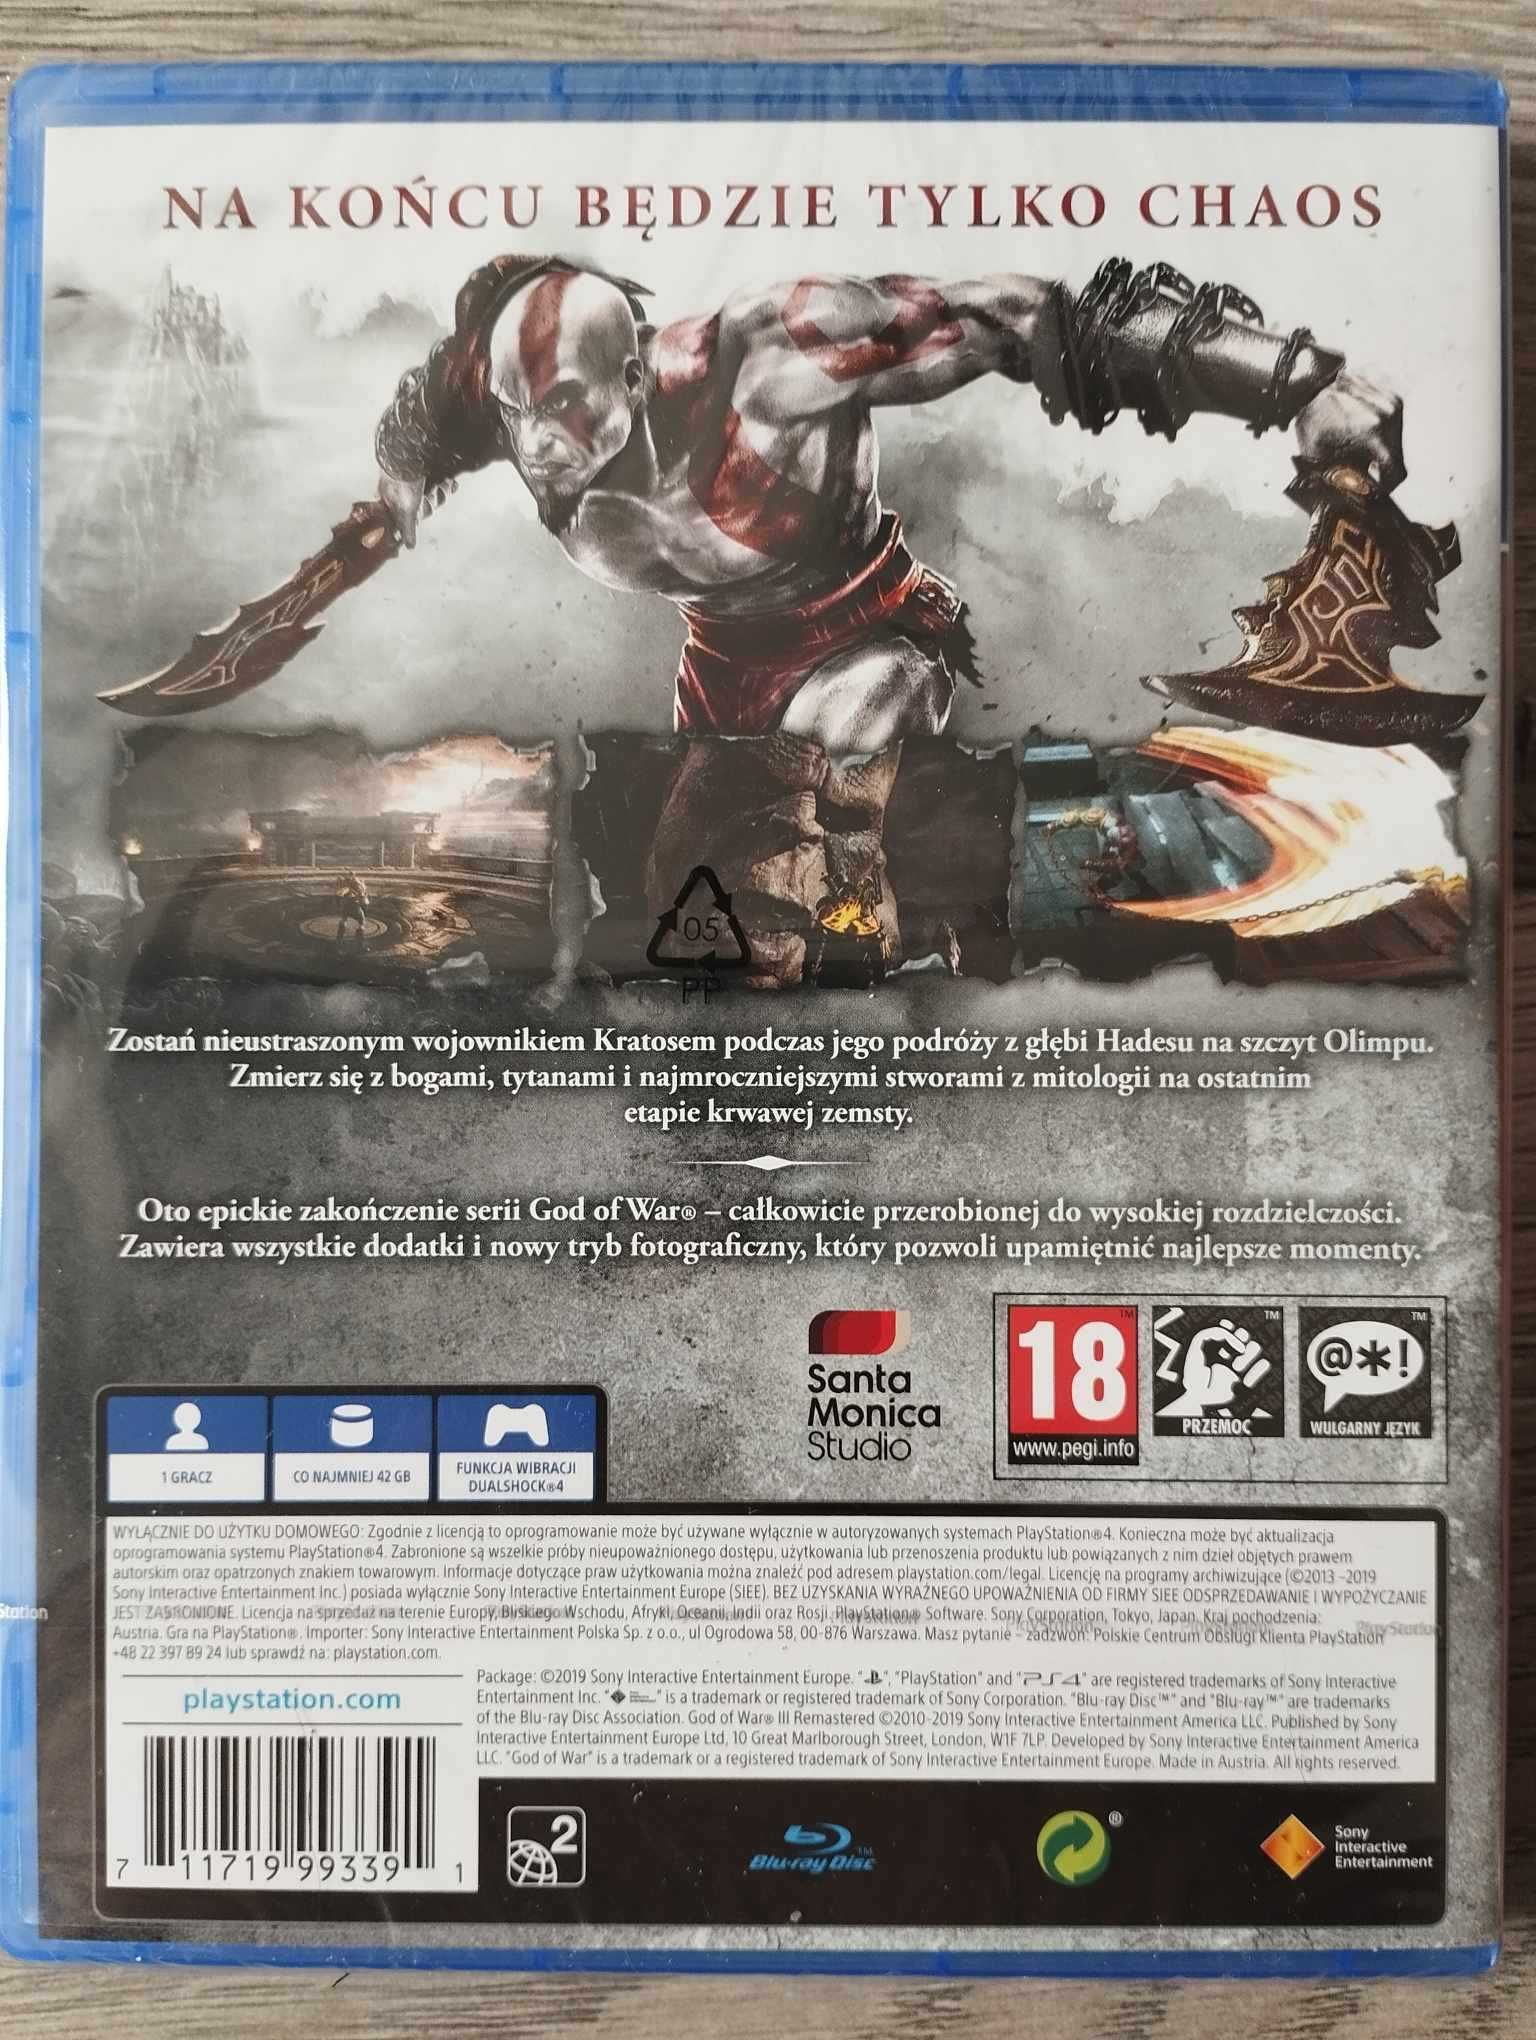 Nowa Gra God of War 3  Remastered  Polska Wersja PS4/PS5 Playstation